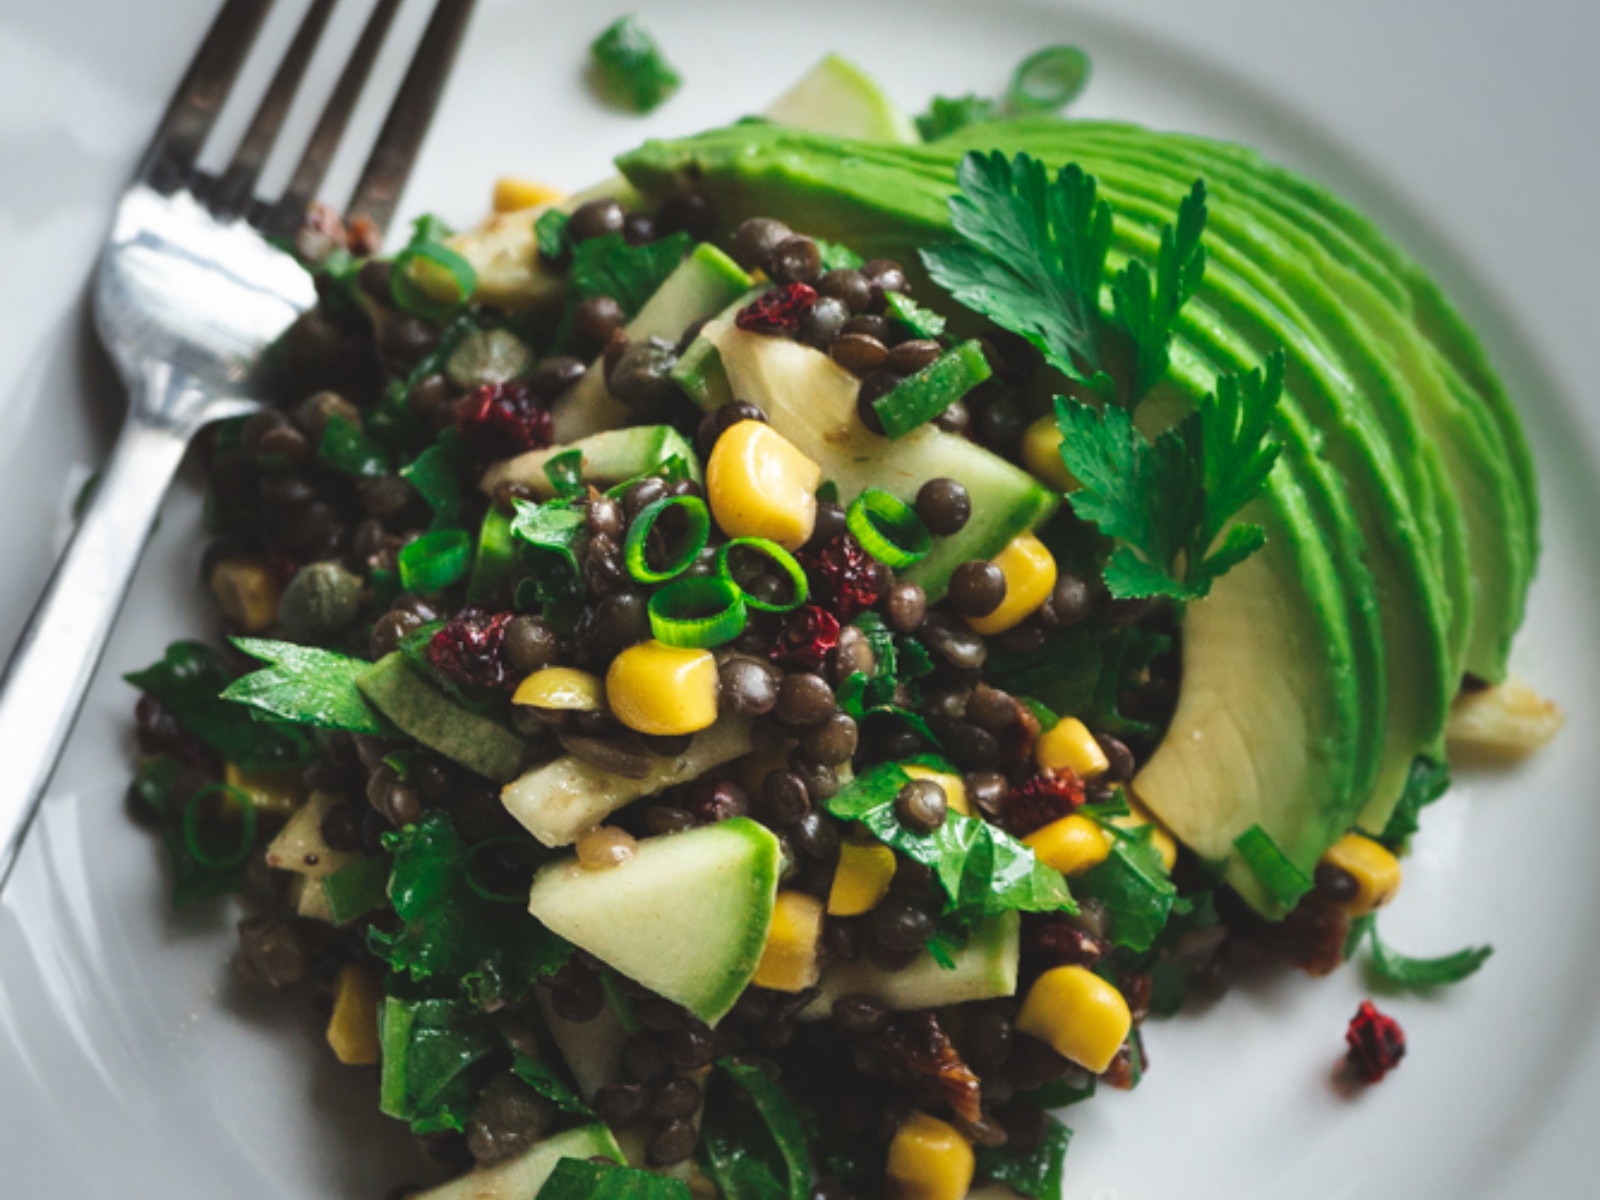 Vegan Lentil Salad With Crunchy Veggies & Herbs